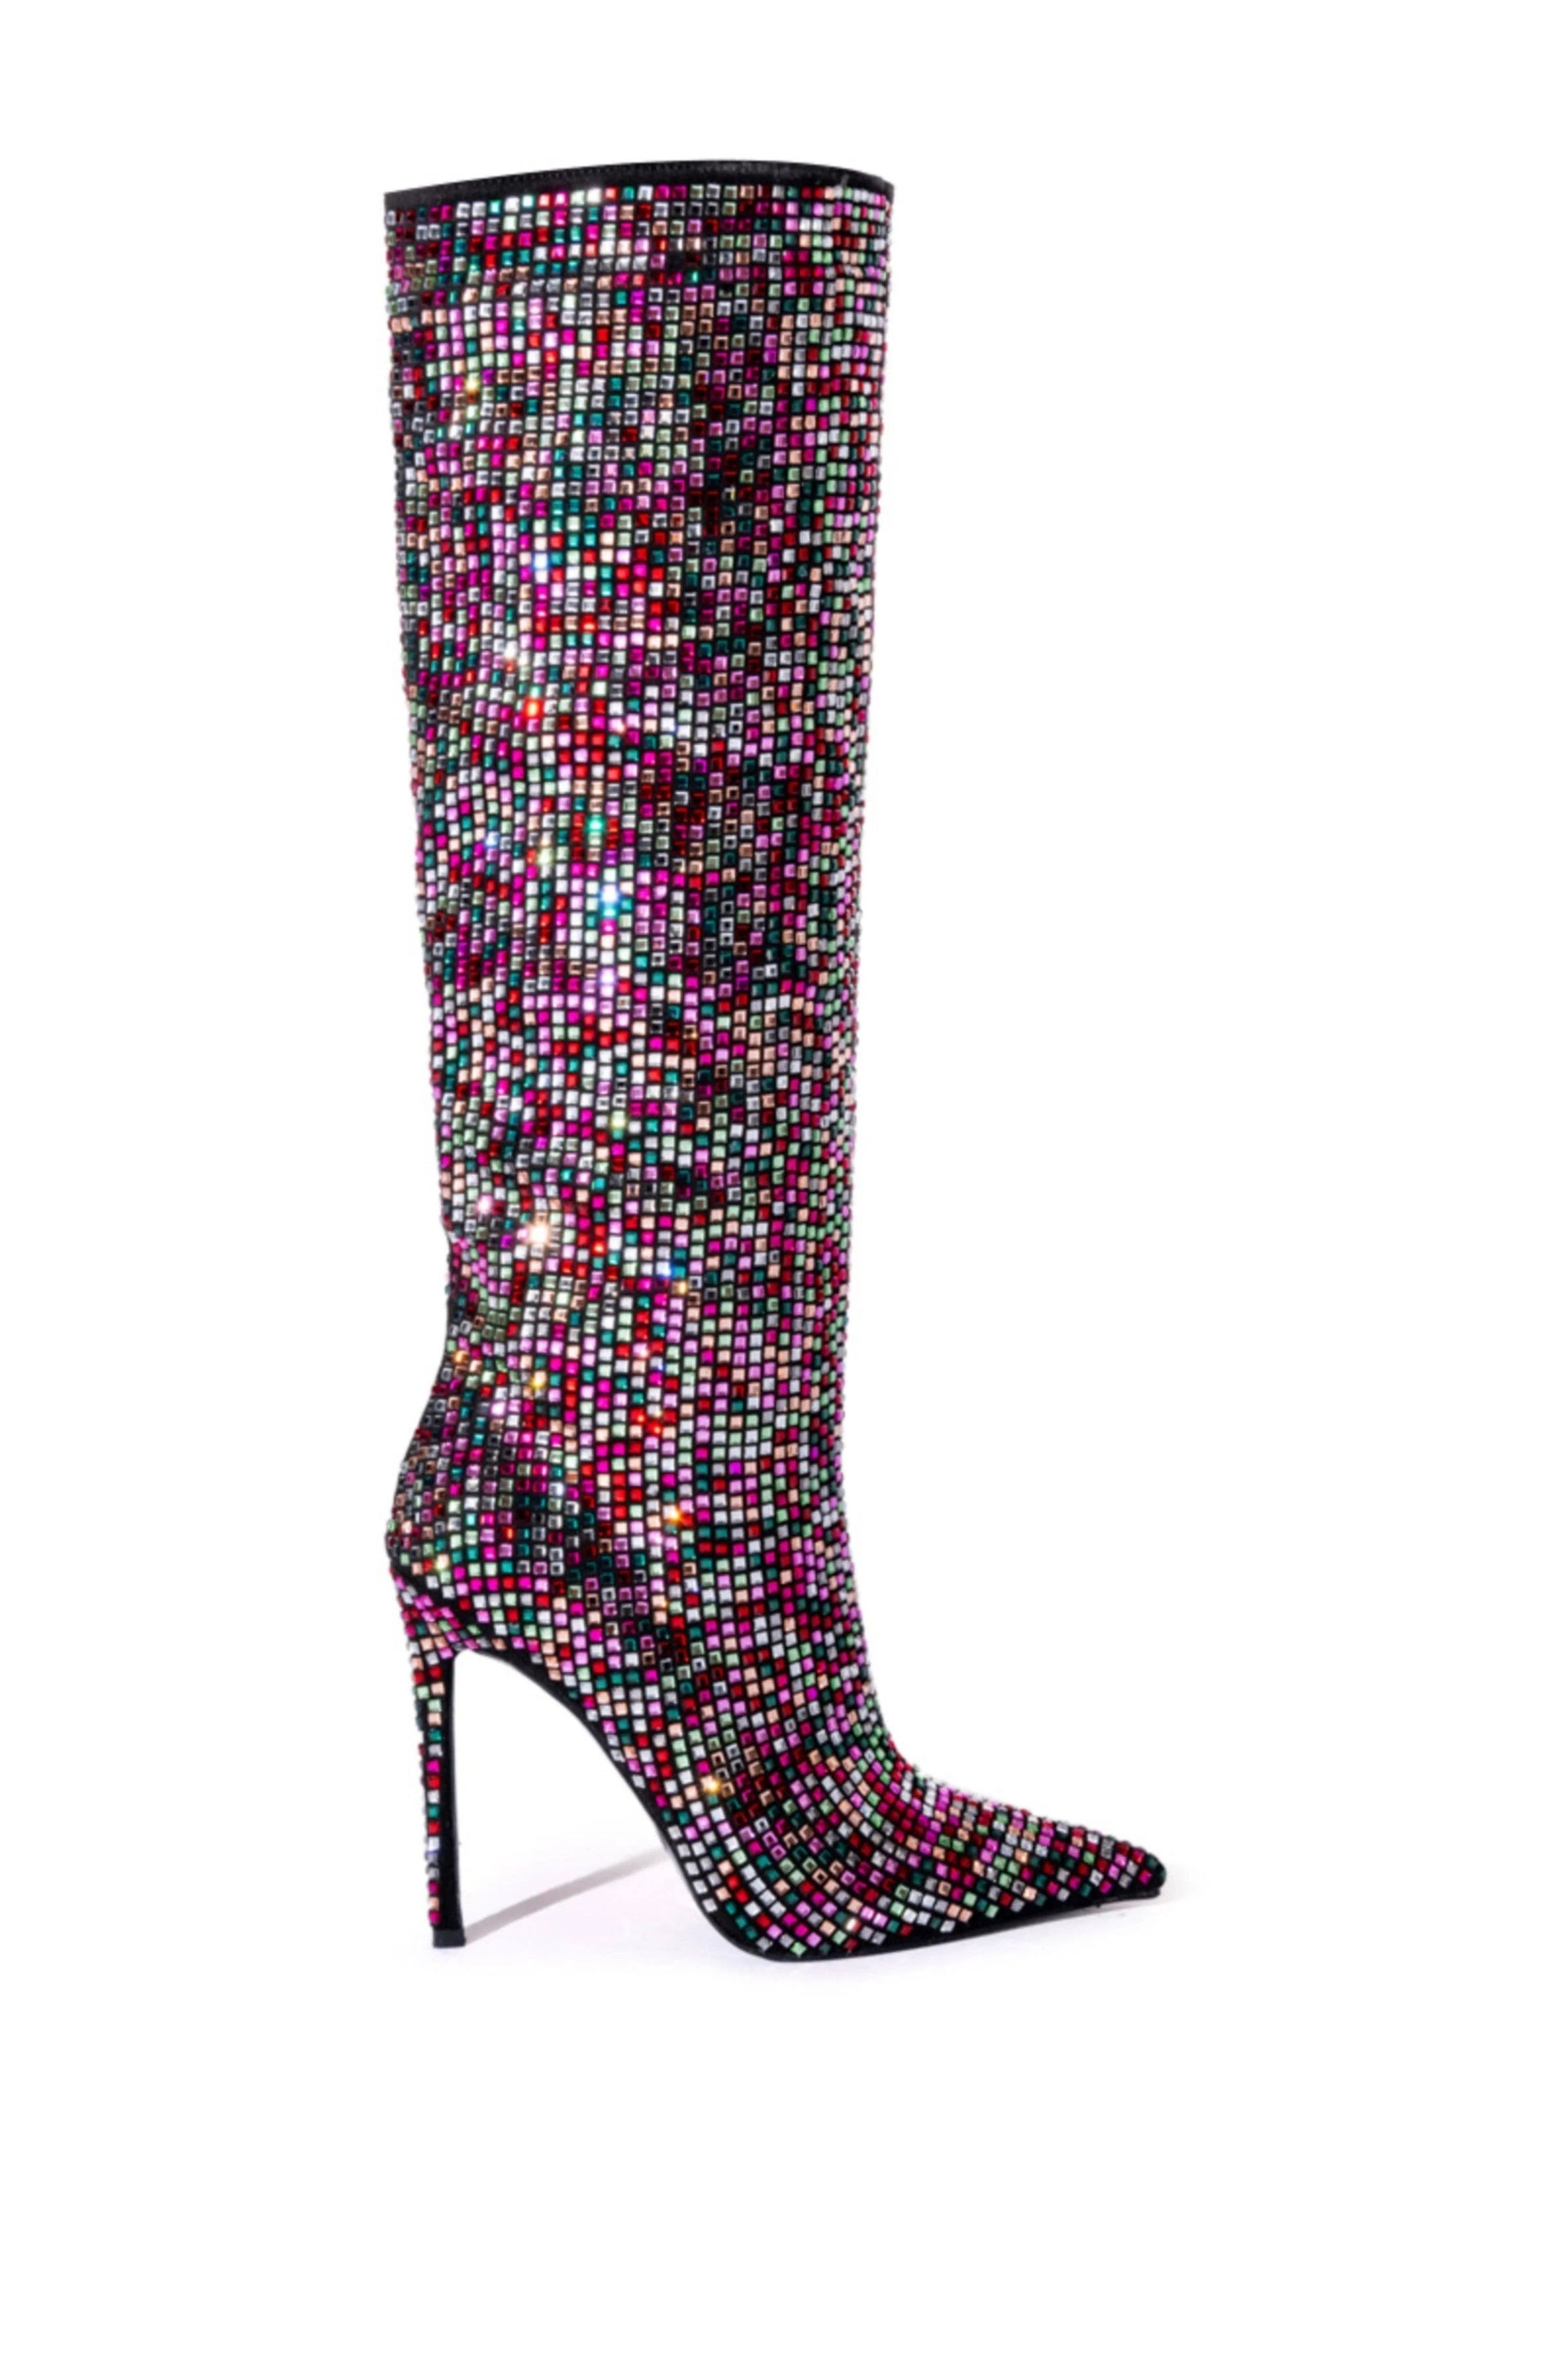 Disco-Inspired Rhinestone Thigh High Boots | Image